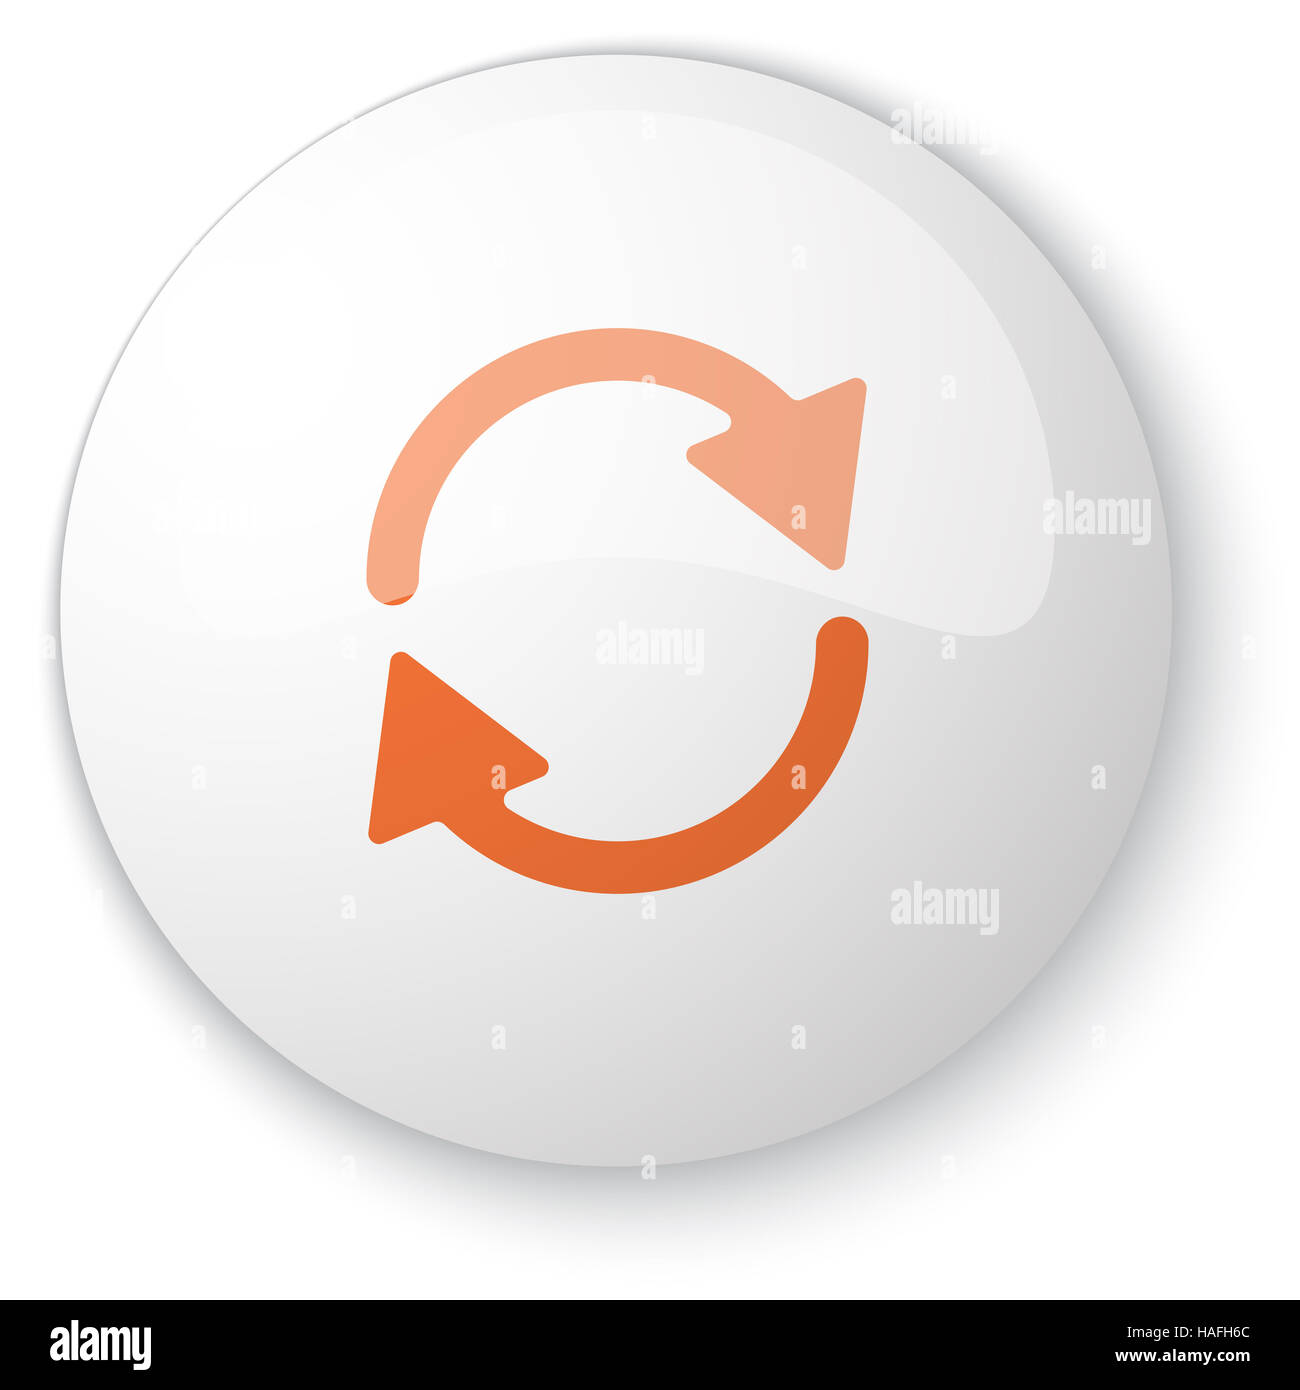 Glossy white web button with orange Refresh icon on white background Stock Photo